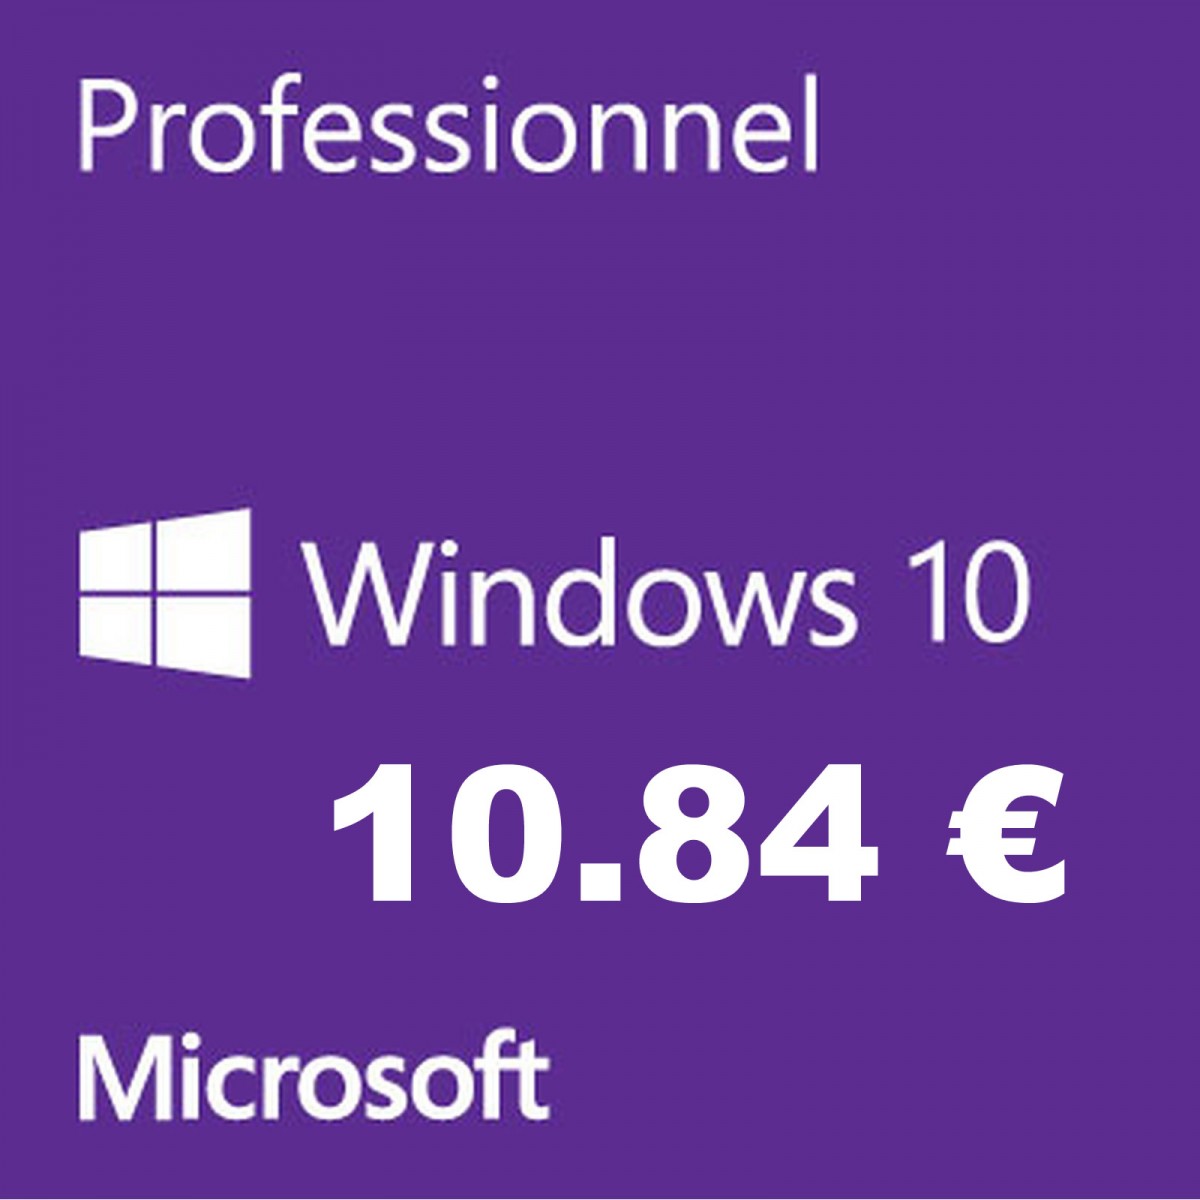 licence-pas-cher windows-pas-cher office-pas-cher windows-10-pro office-2019 50 euros